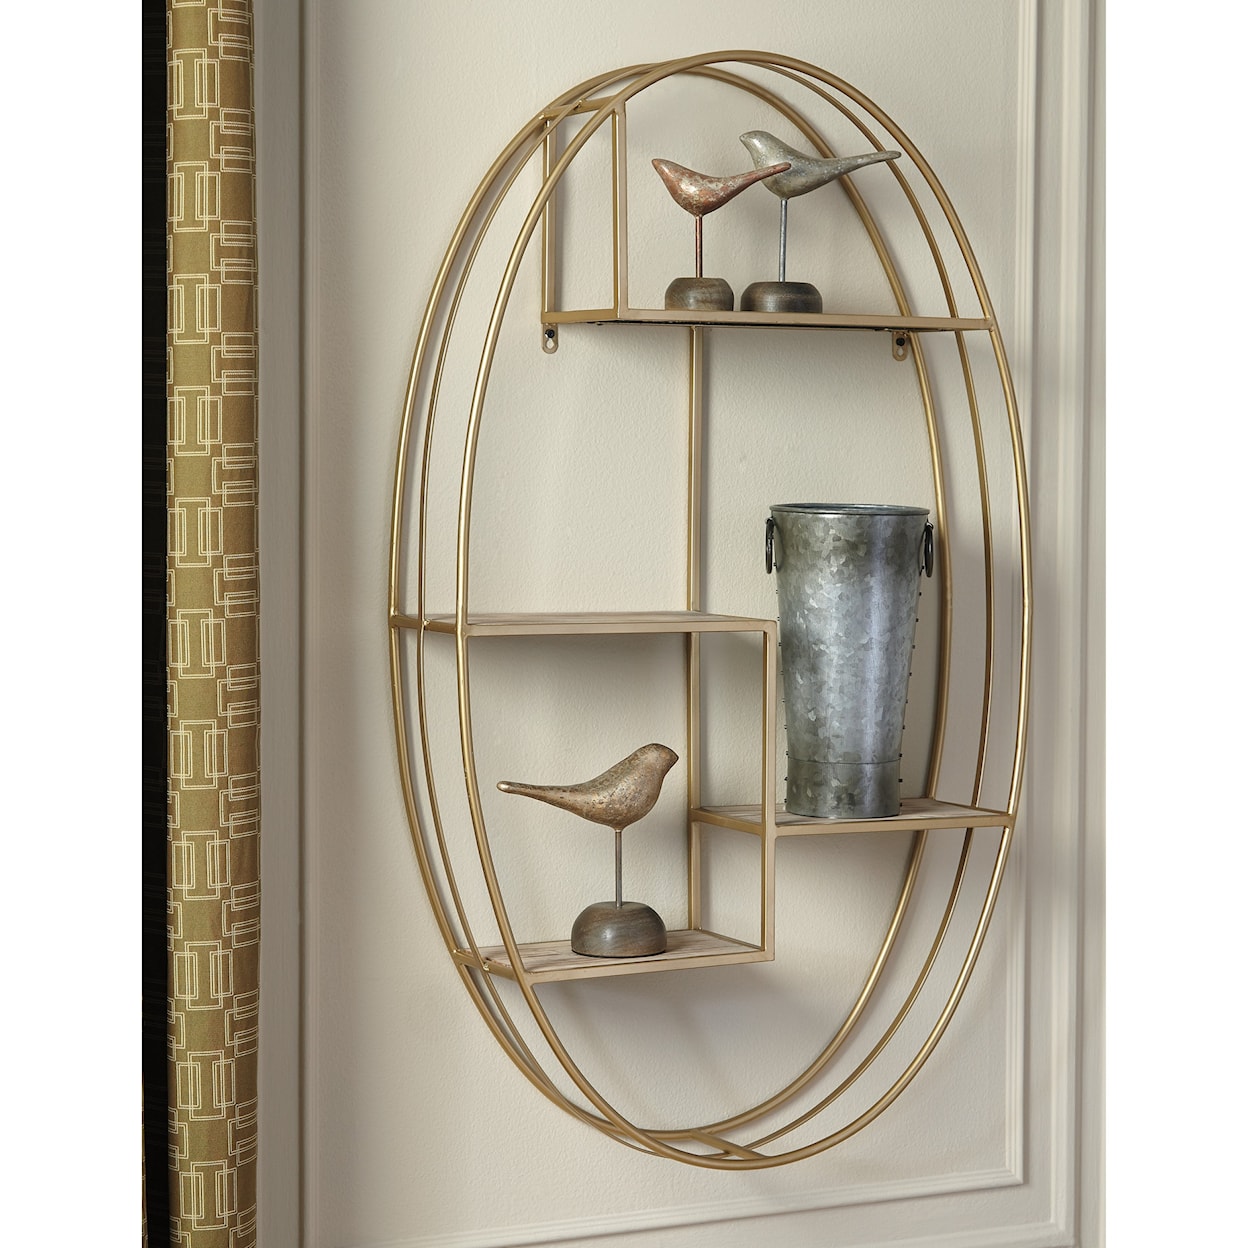 Ashley Furniture Signature Design Wall Art Elettra Natural/Gold Finish Wall Shelf